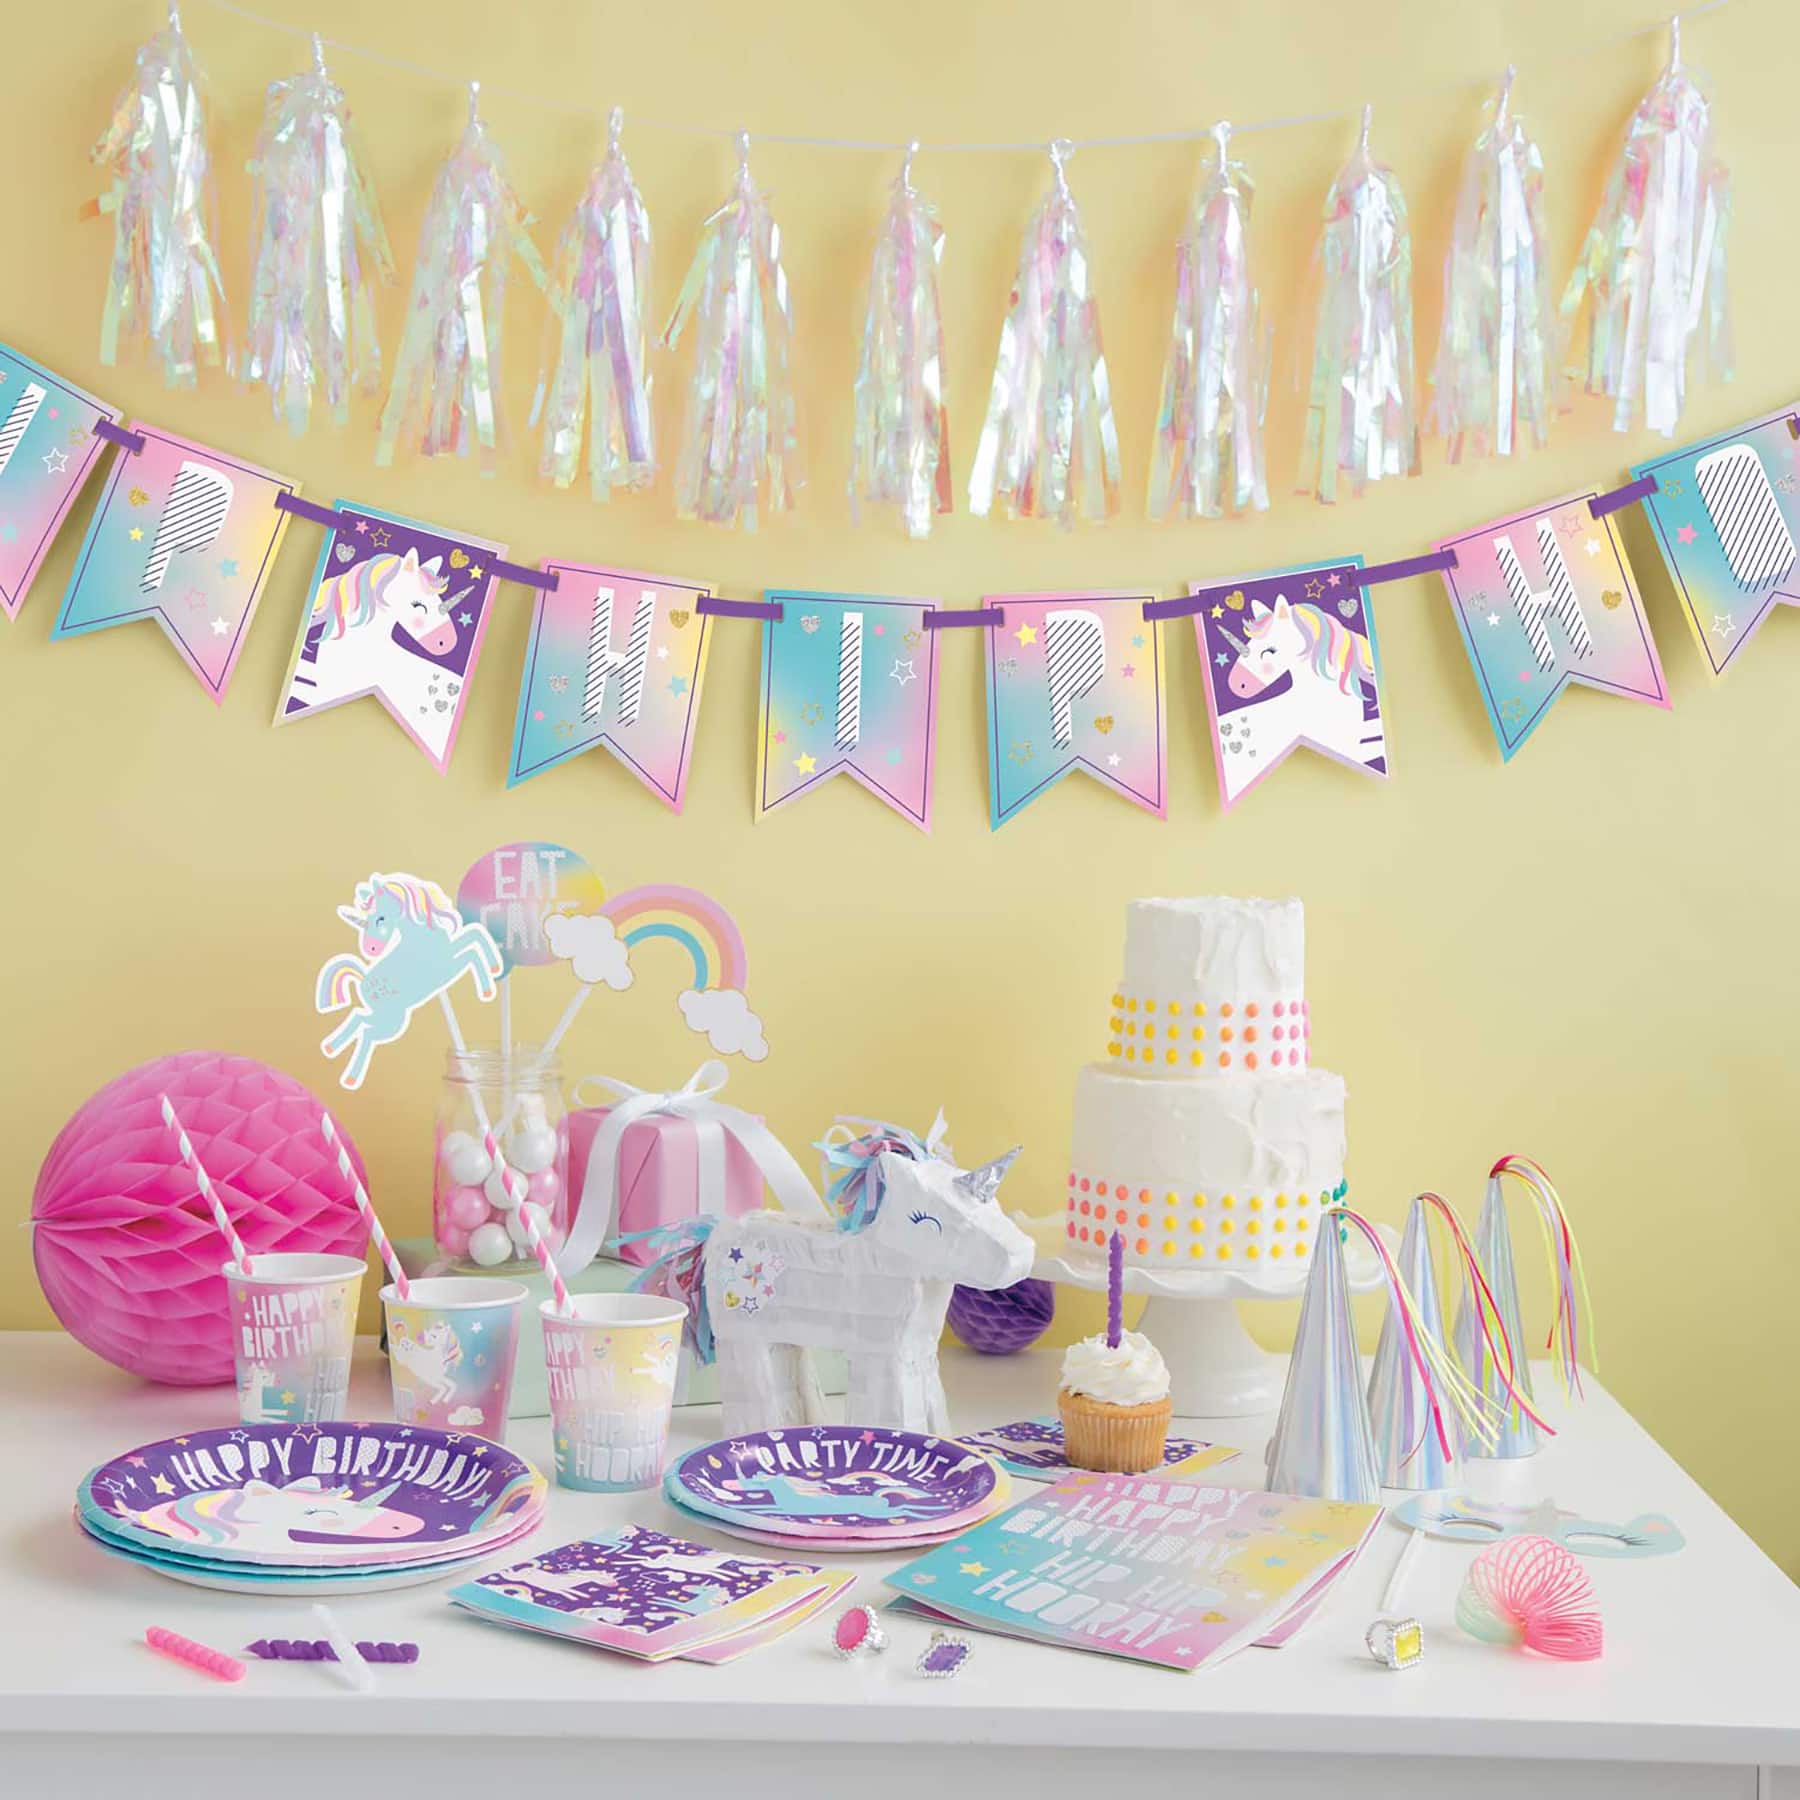 Iridescent Tassel Banner | Iridescent Party Decorations